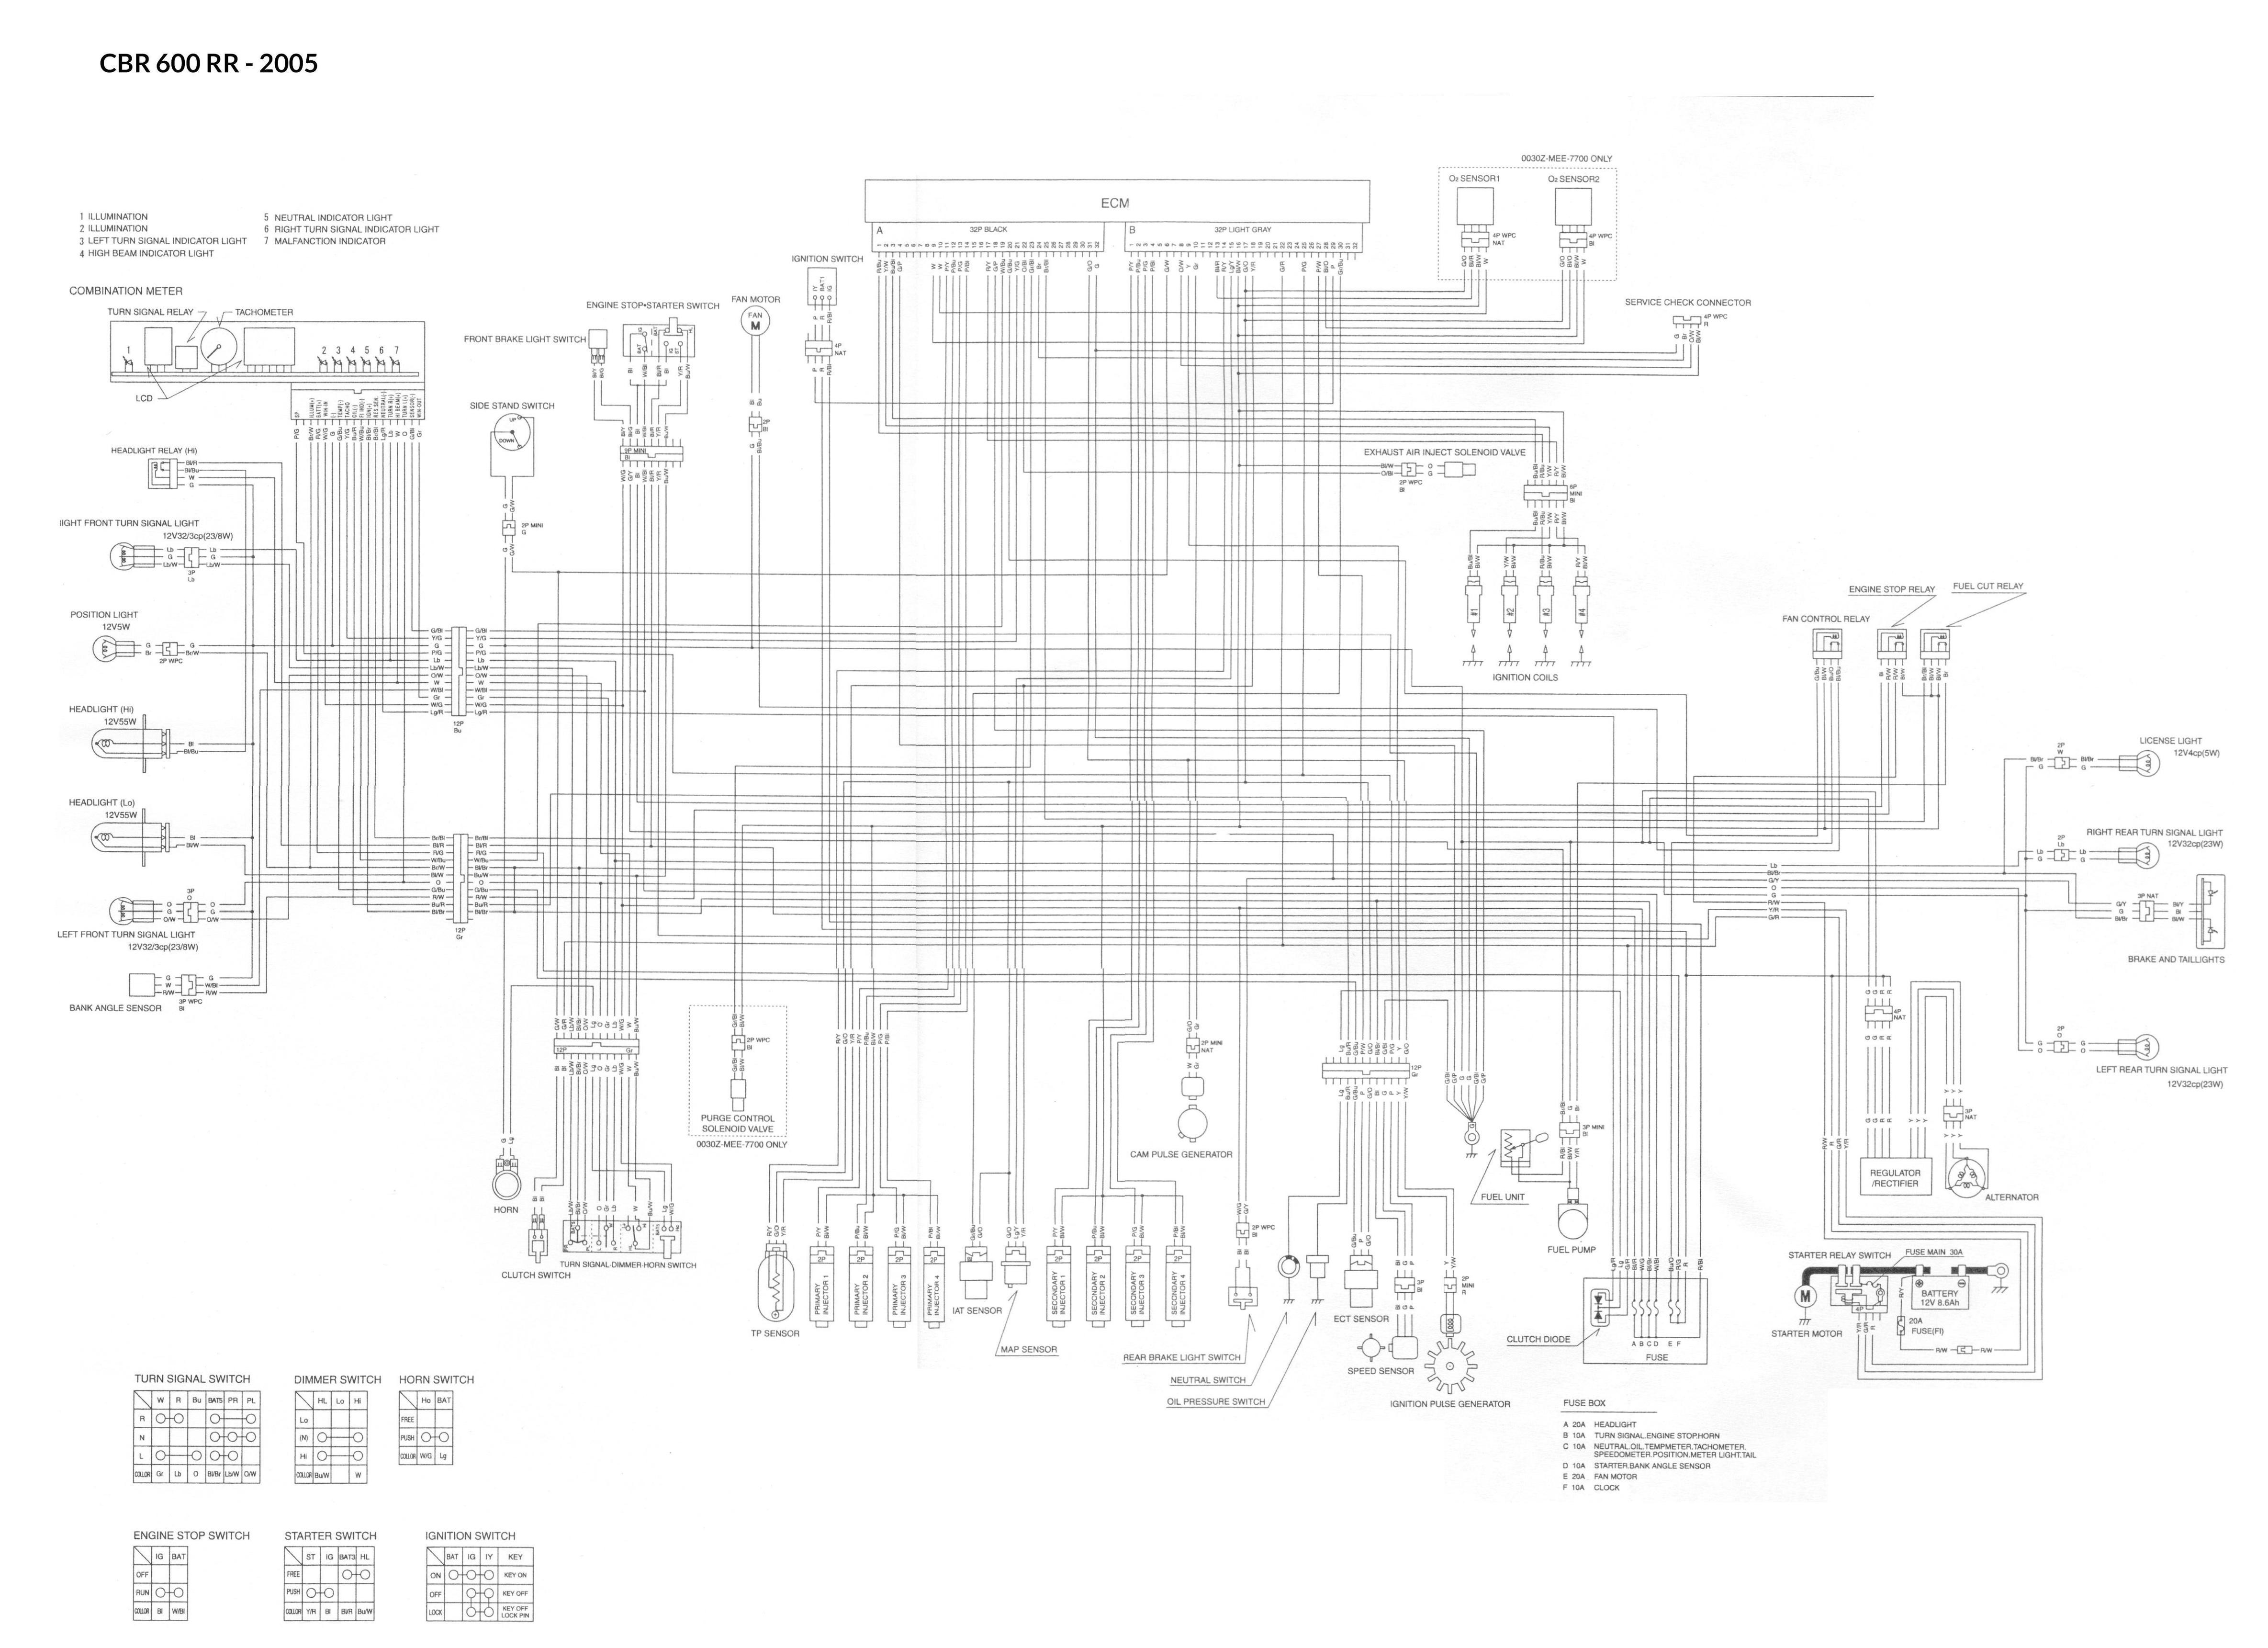 2003 Honda Odyssey Engine Wiring Schematic Diagram] Honda Cb600 Wiring Diagram Full Version Hd Quality Of 2003 Honda Odyssey Engine Wiring Schematic